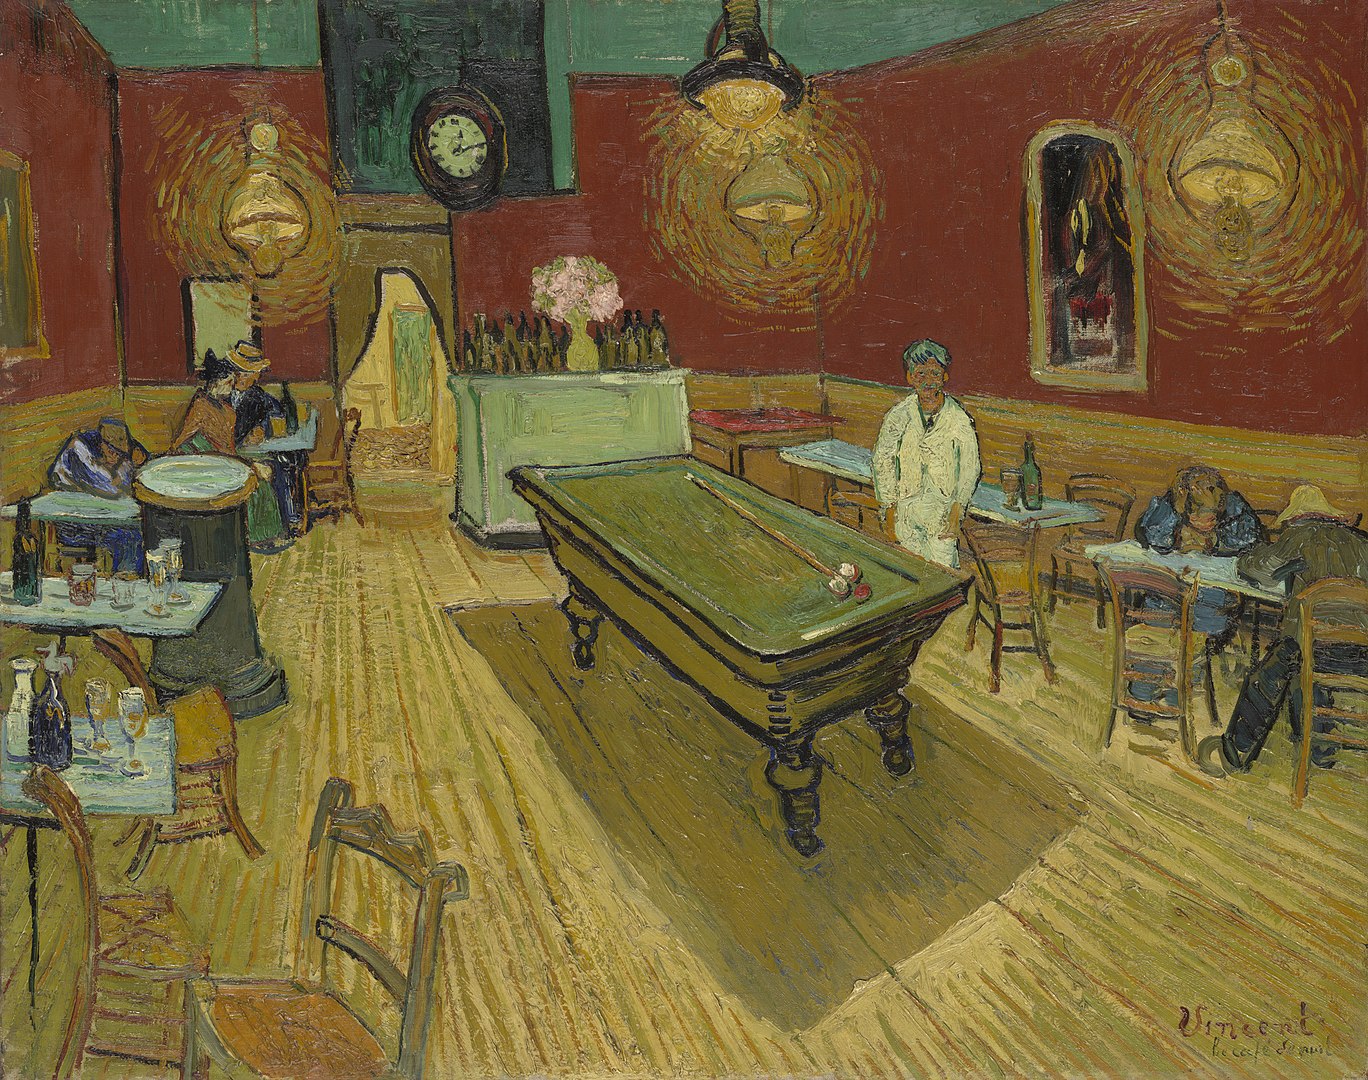 Vincent van Gogh, The Night Café, 1888